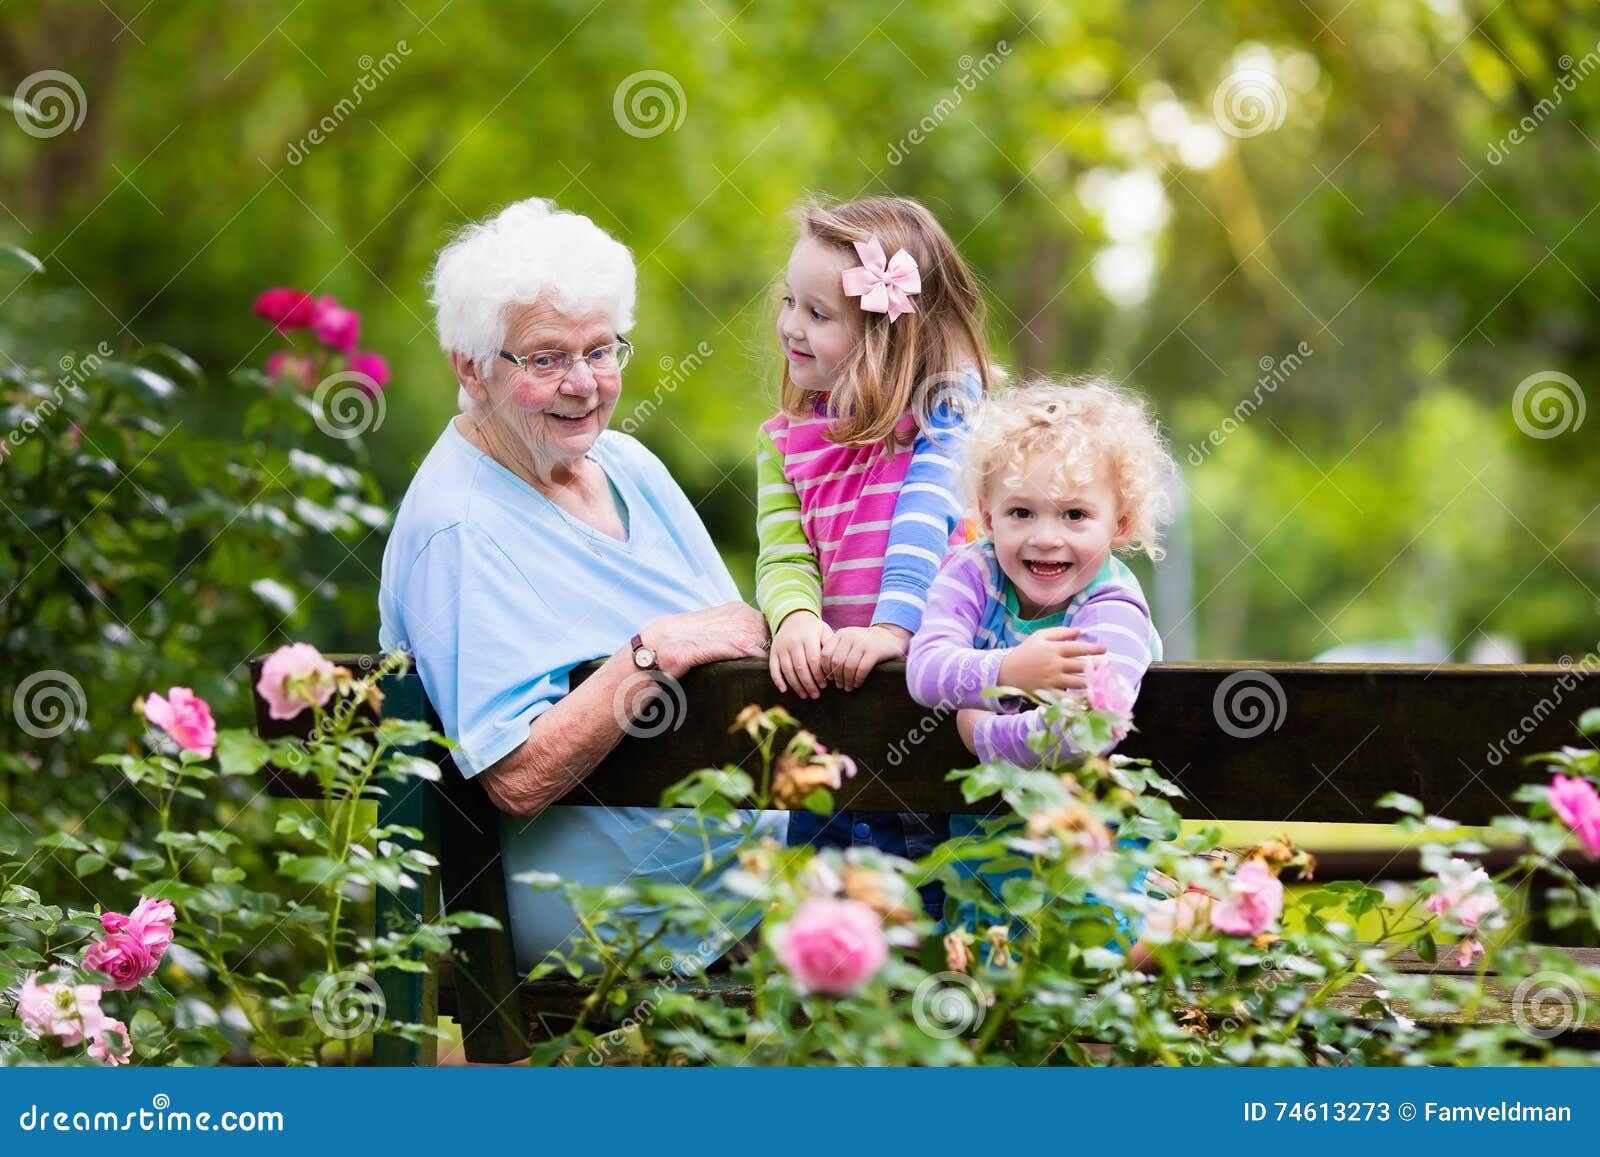 Какой сад был у старушки. Бабушка и внучка в саду. В саду у бабушки. Babushka v sadu. Цветы у бабушки в саду.